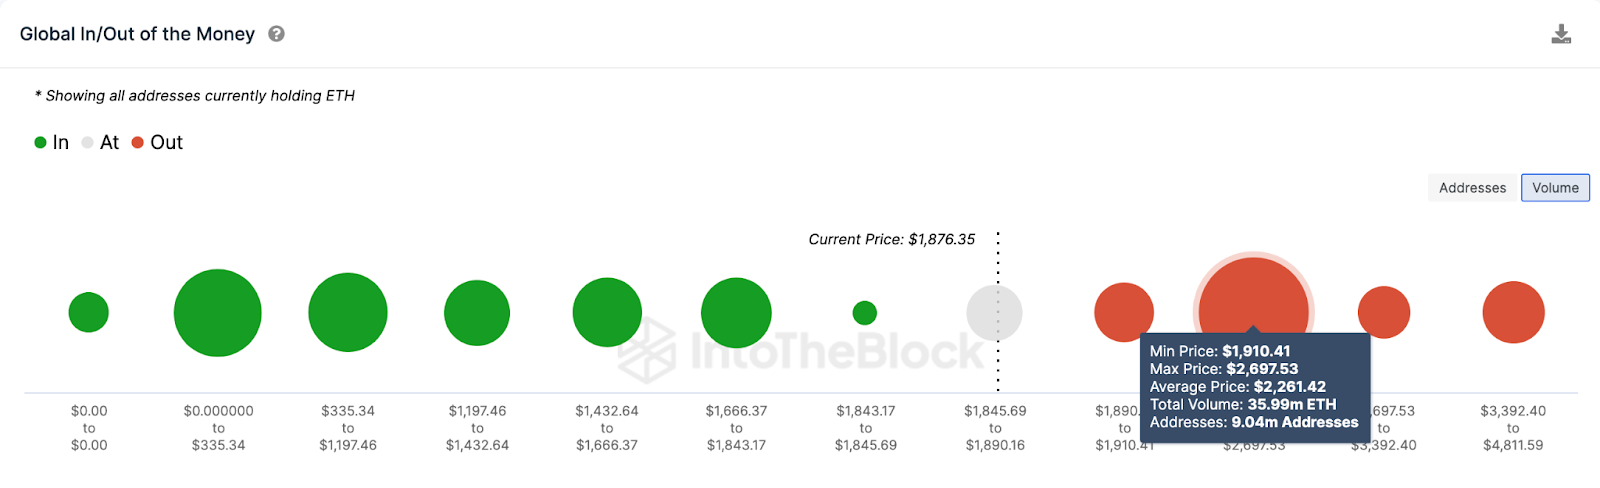 Ethereum (ETH) Price Prediction | GIOM data, July 2023